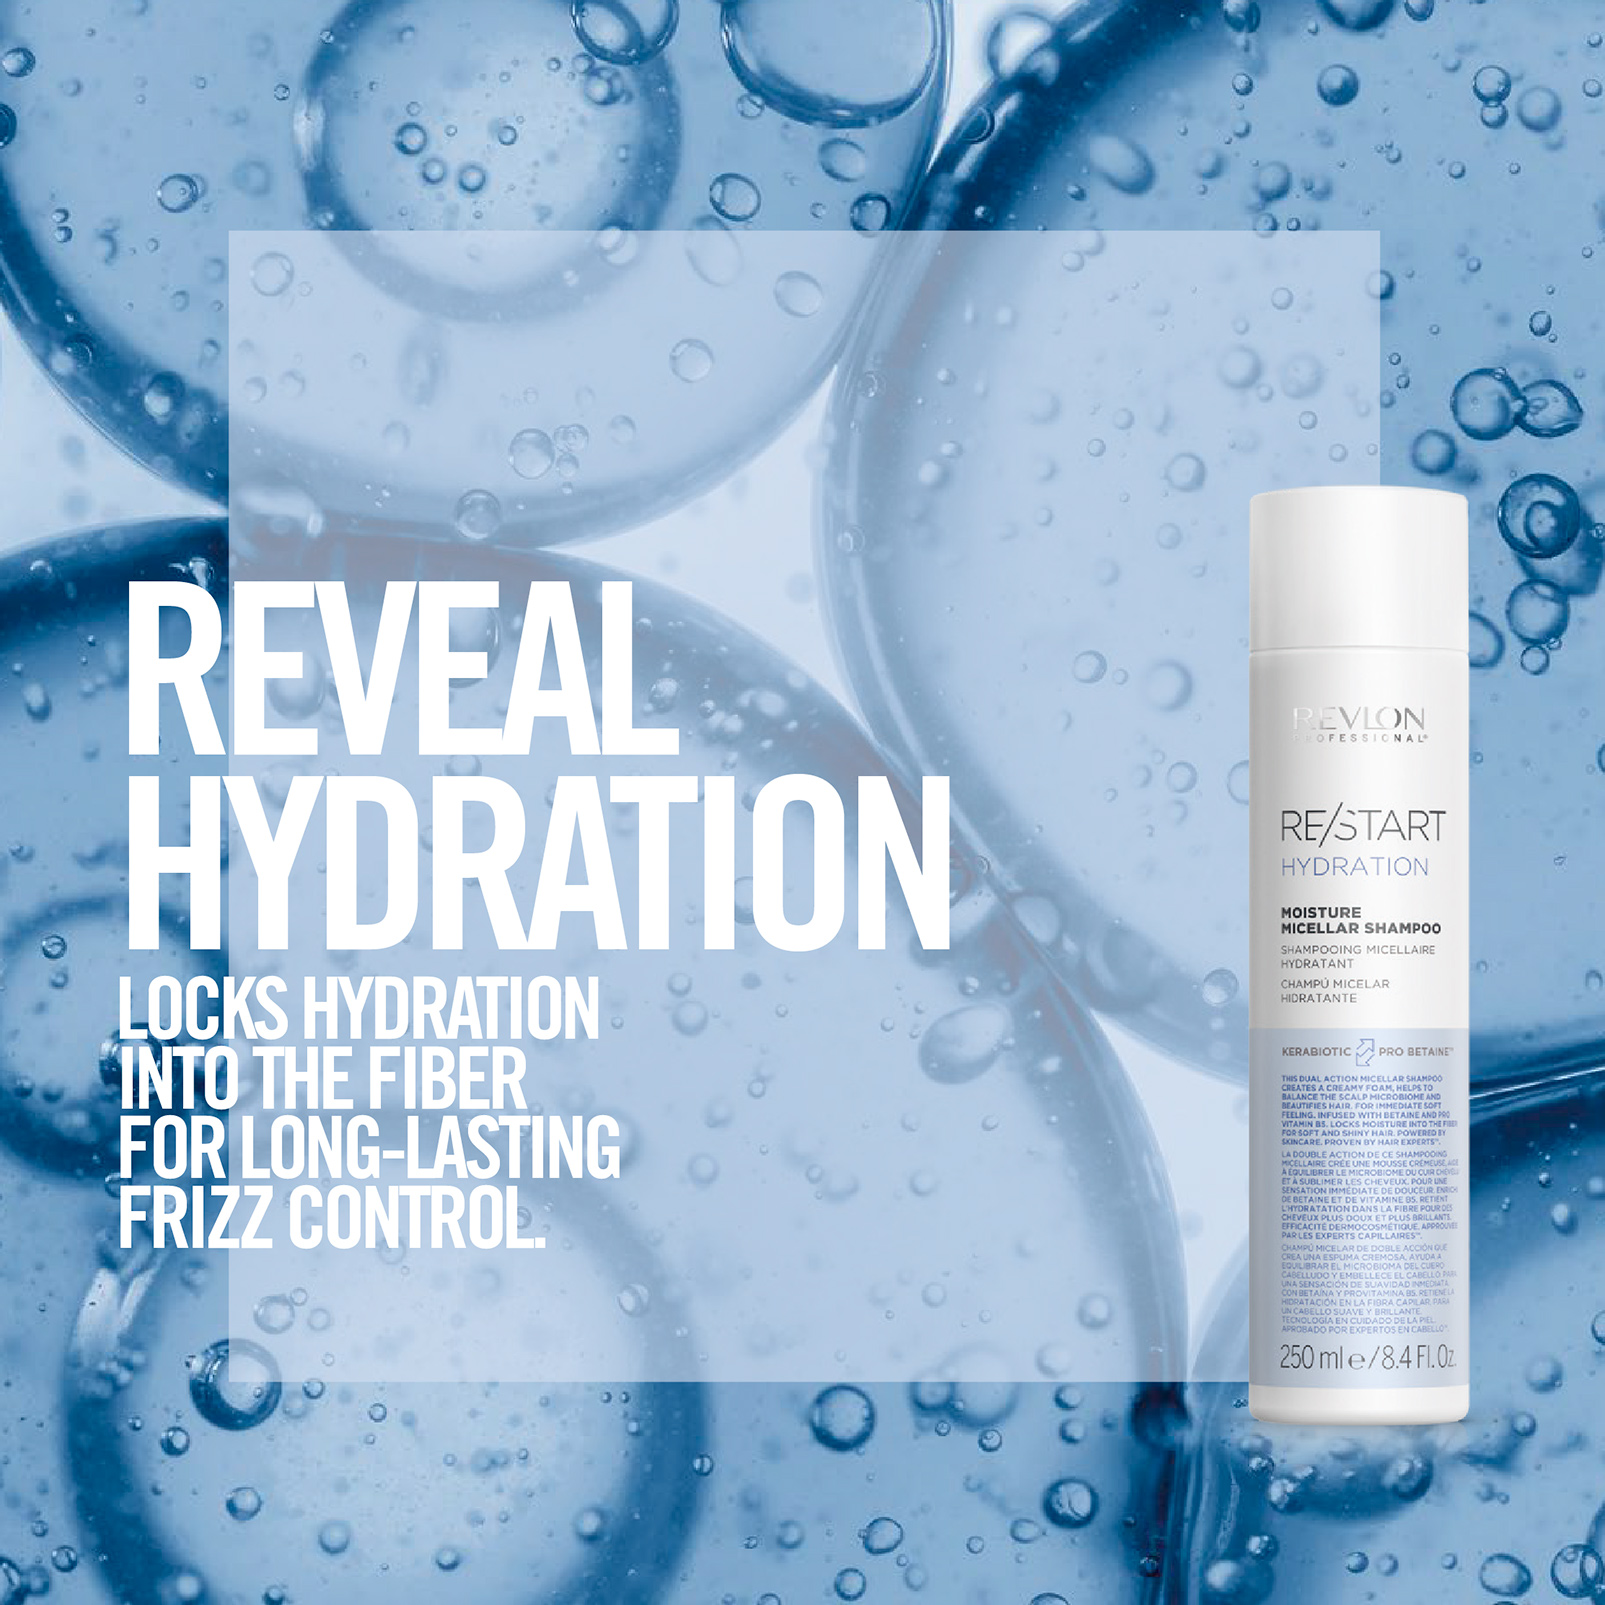 RE/START™ Hydration Moisture Micellar - Shampoo Professional Revlon